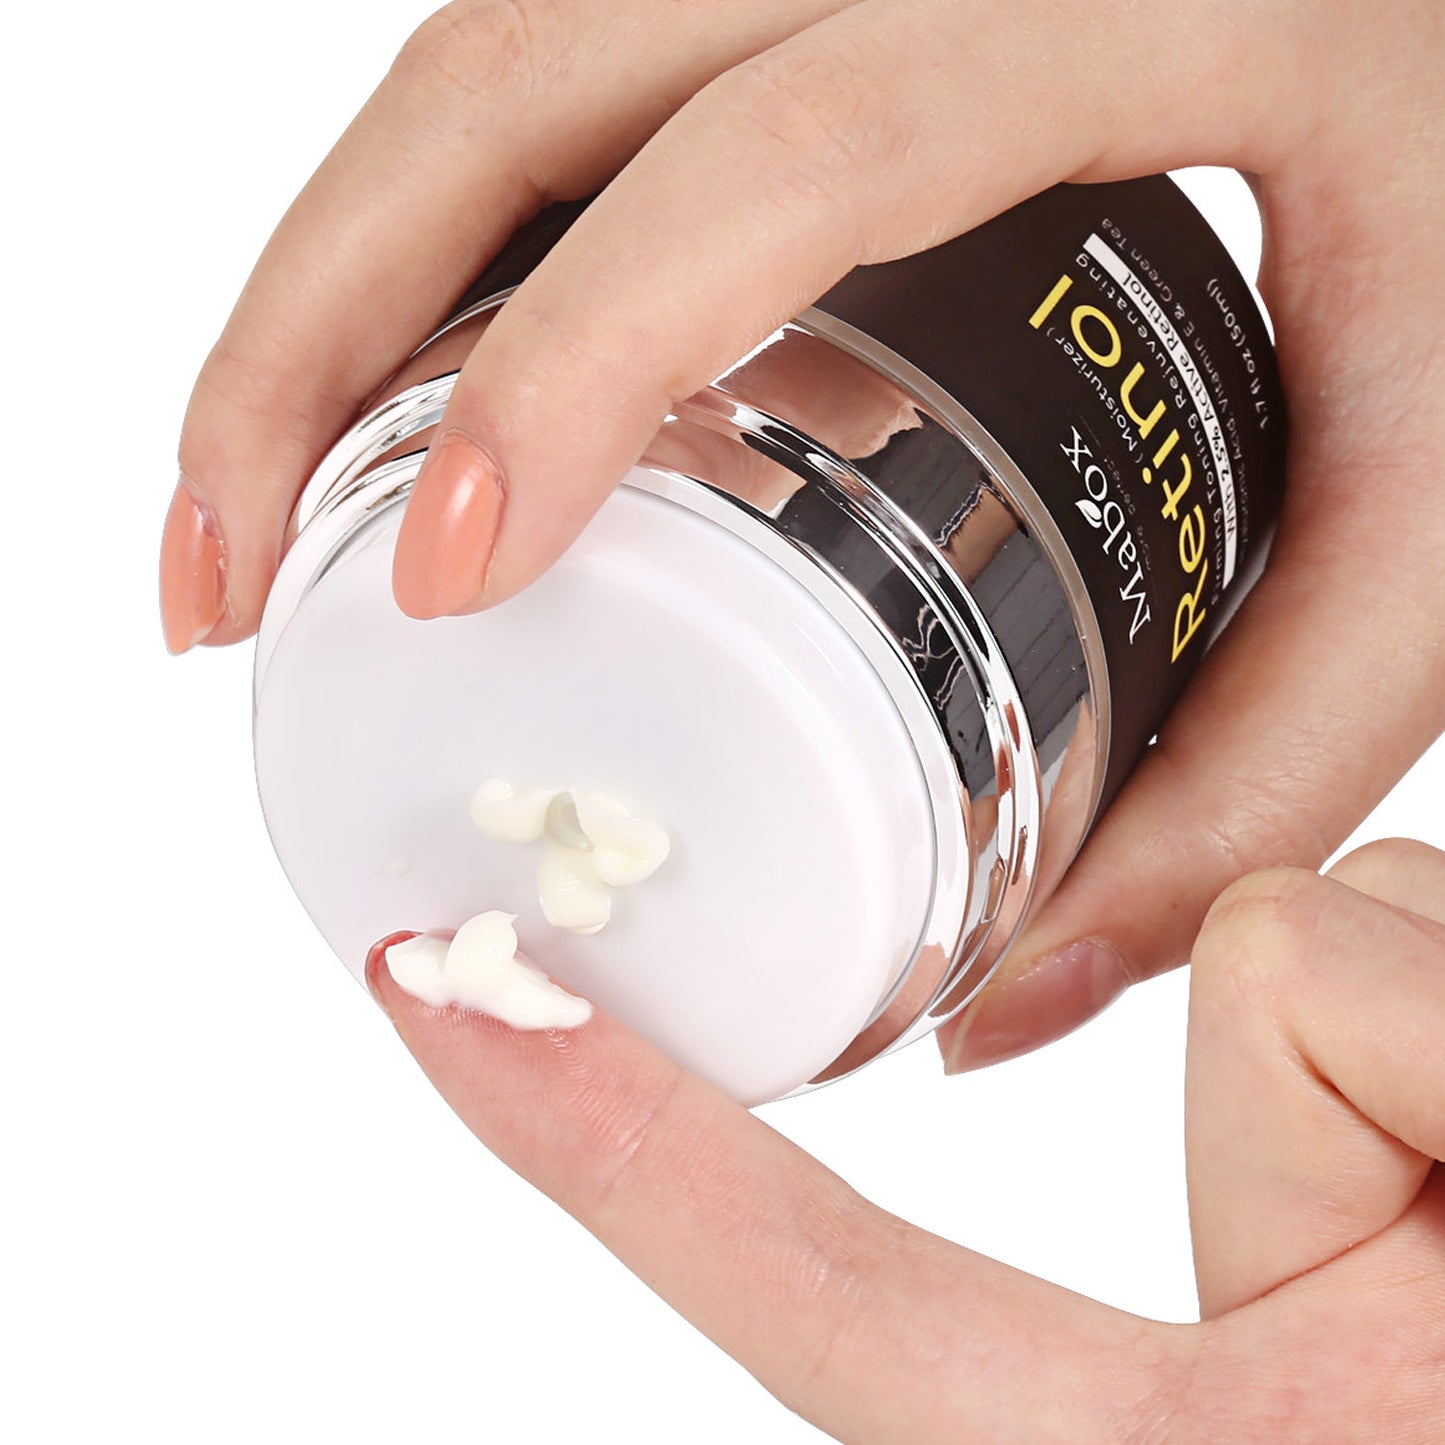 Wholesale Skin Care Retinol Cream, Hydrating, Vitamin A Alcohol Cream, Moisturizing Lotion Face Cream 298